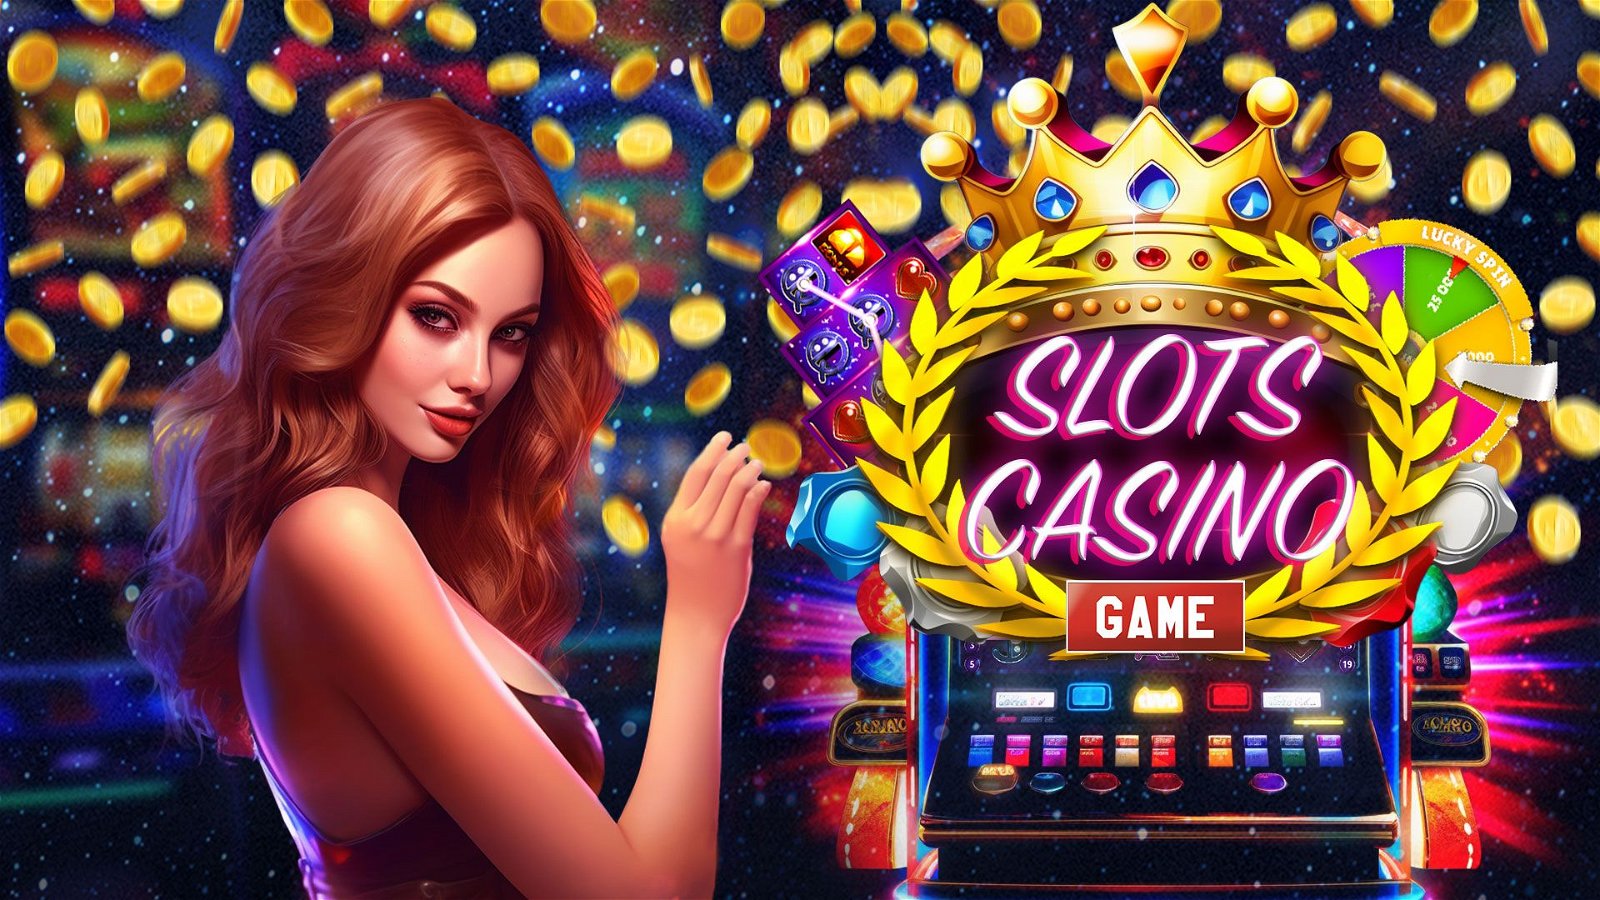 Image of Slots Casino Game